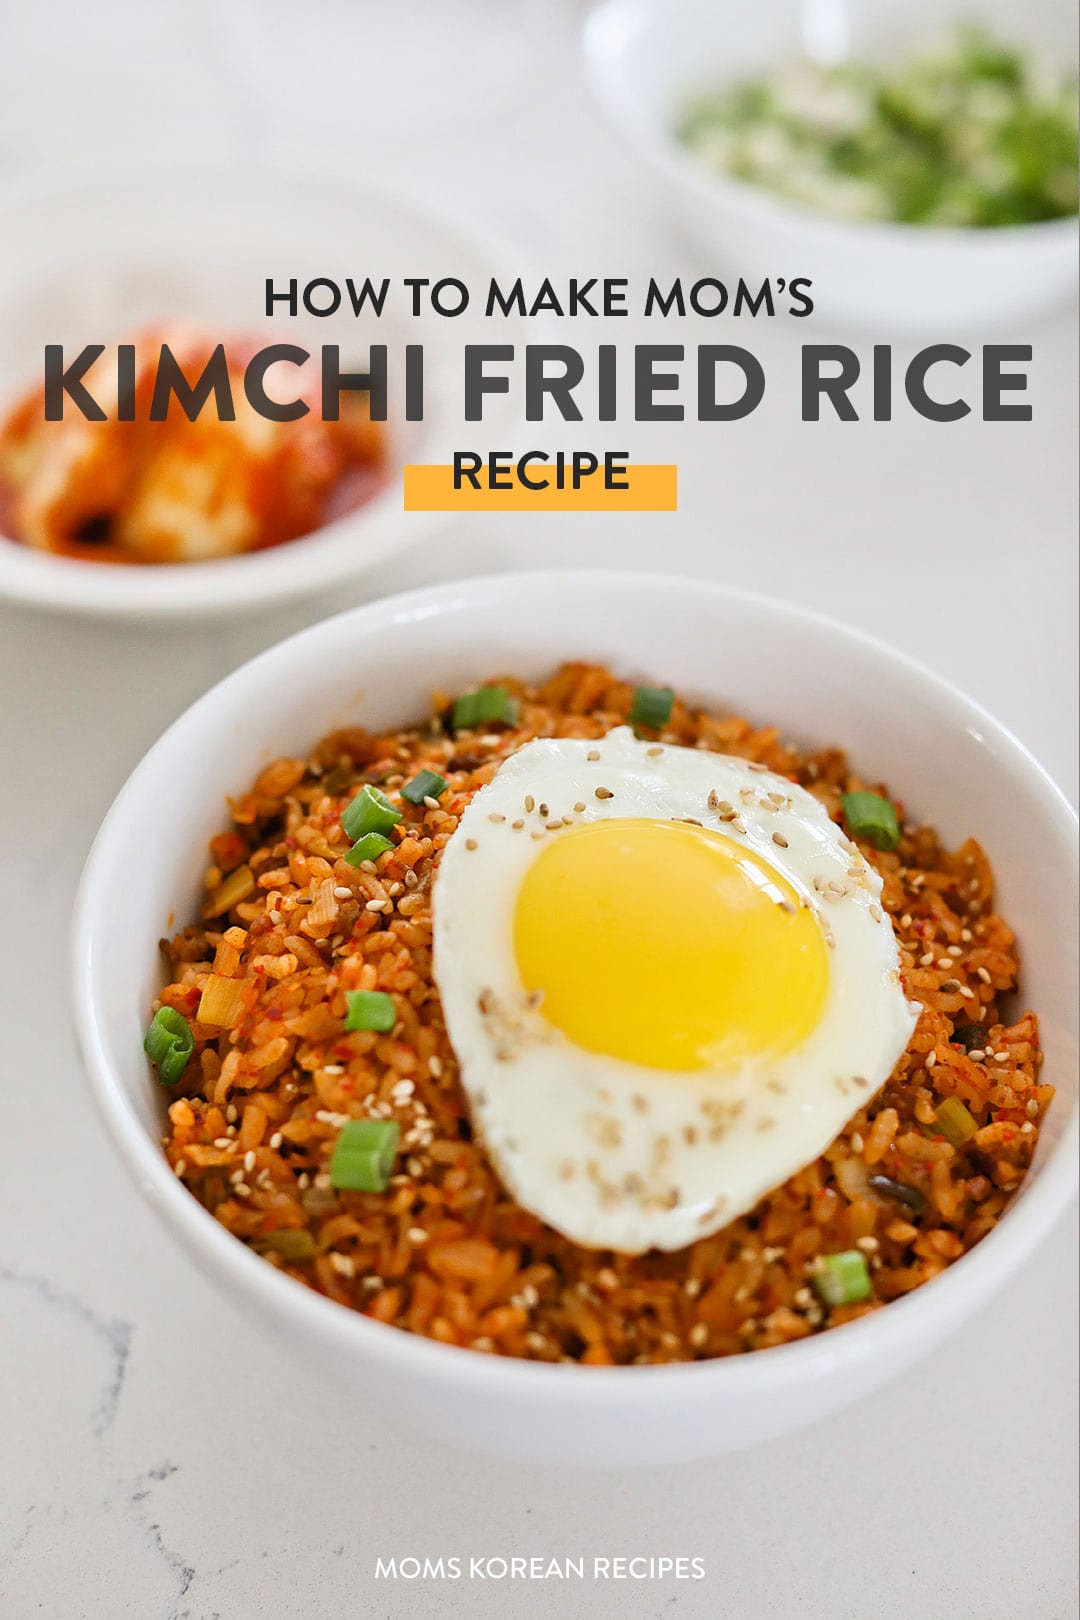 How to Make Mom's Kimchi Fried Rice Recipe (김치 볶음밥 레시피)